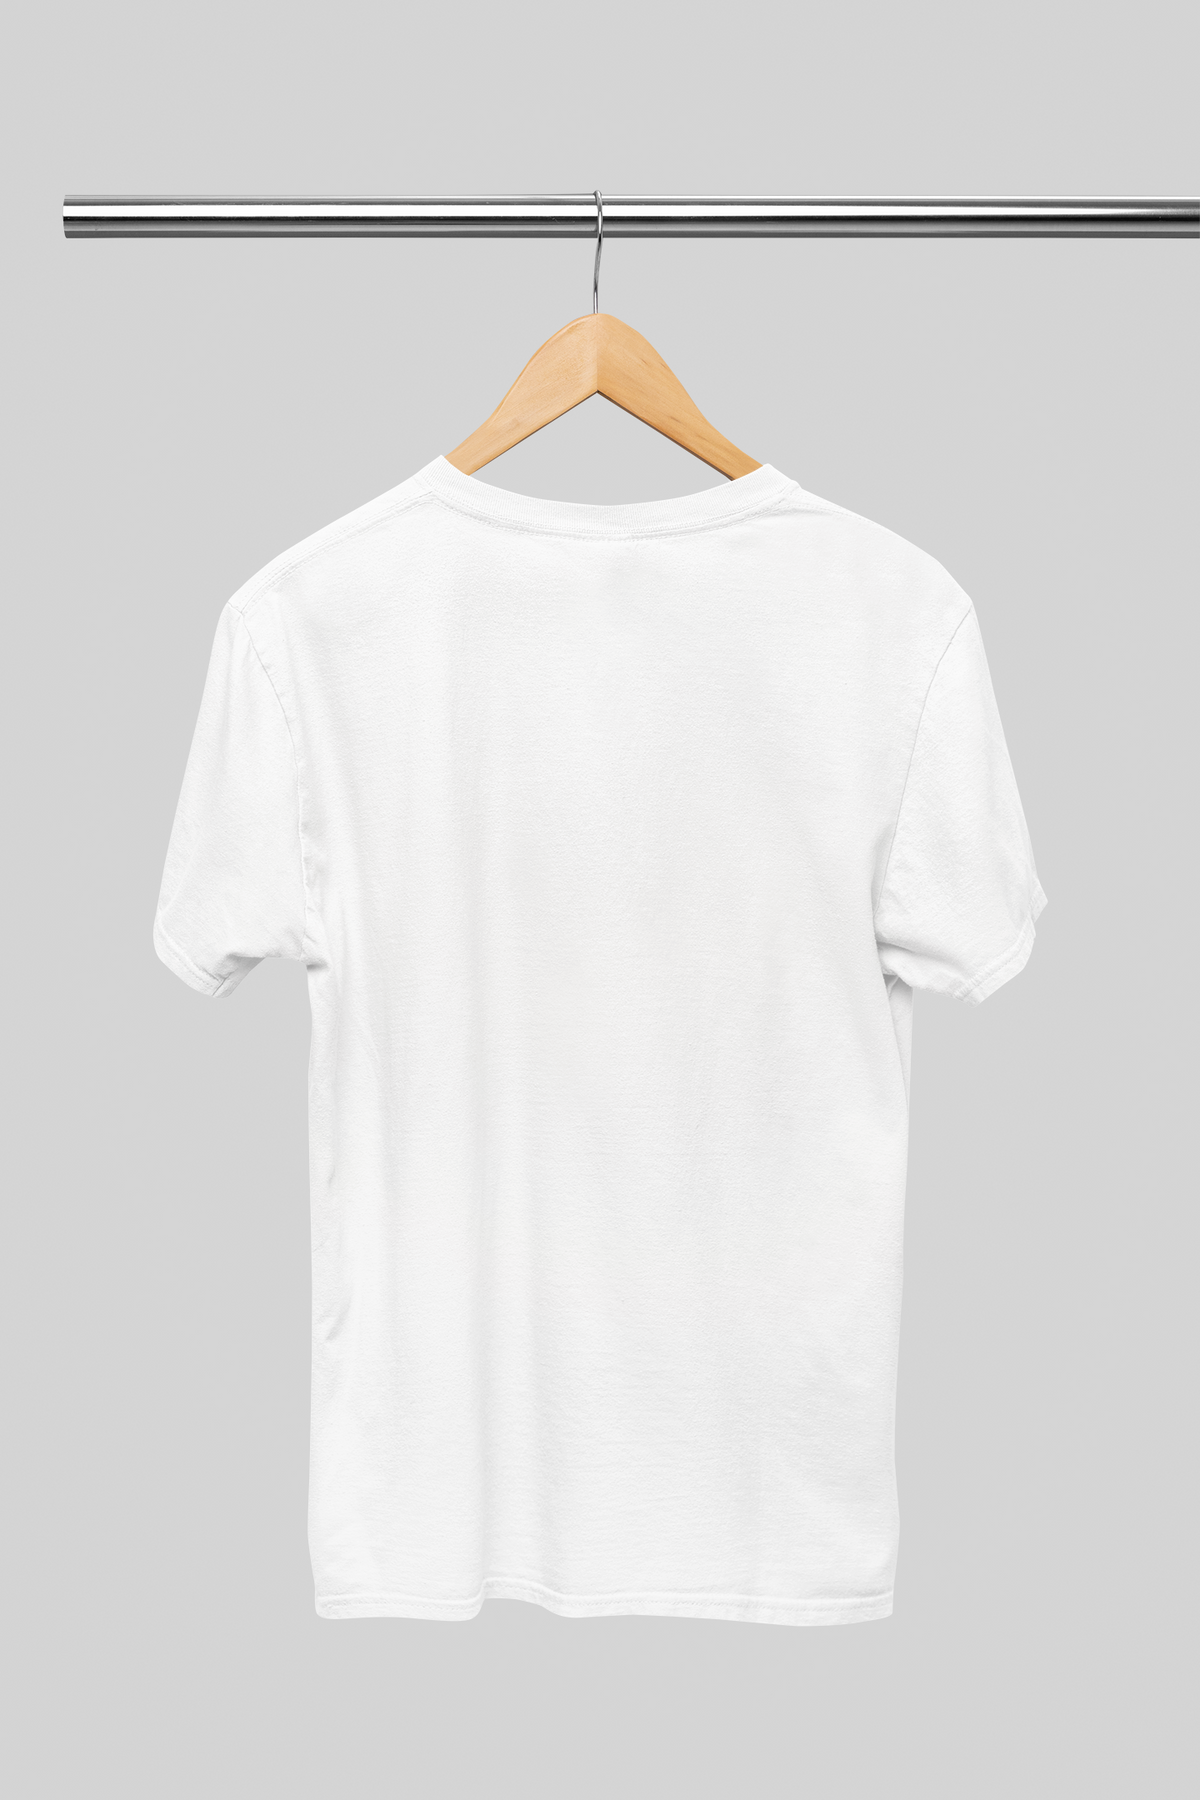 Plain white Unisex T-shirt